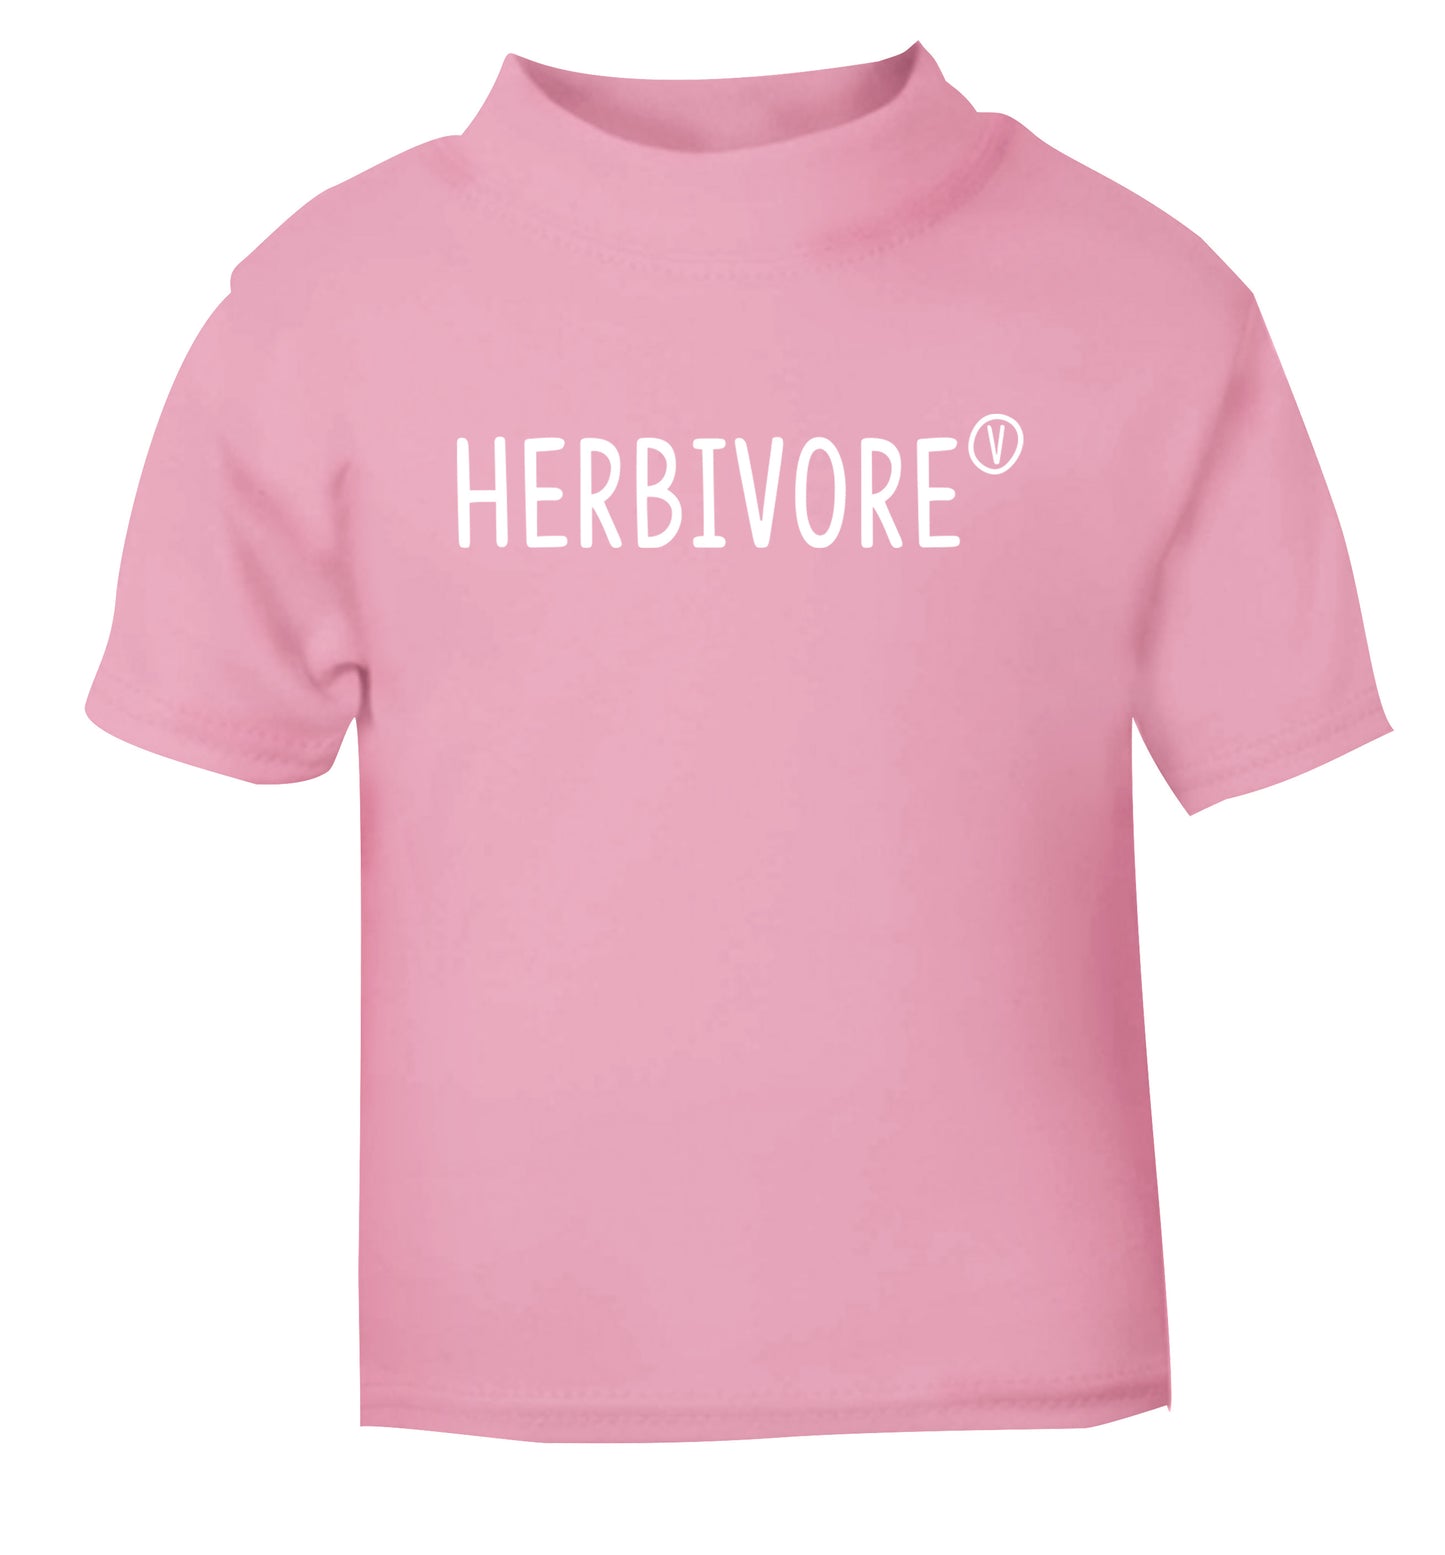 Herbivore light pink Baby Toddler Tshirt 2 Years